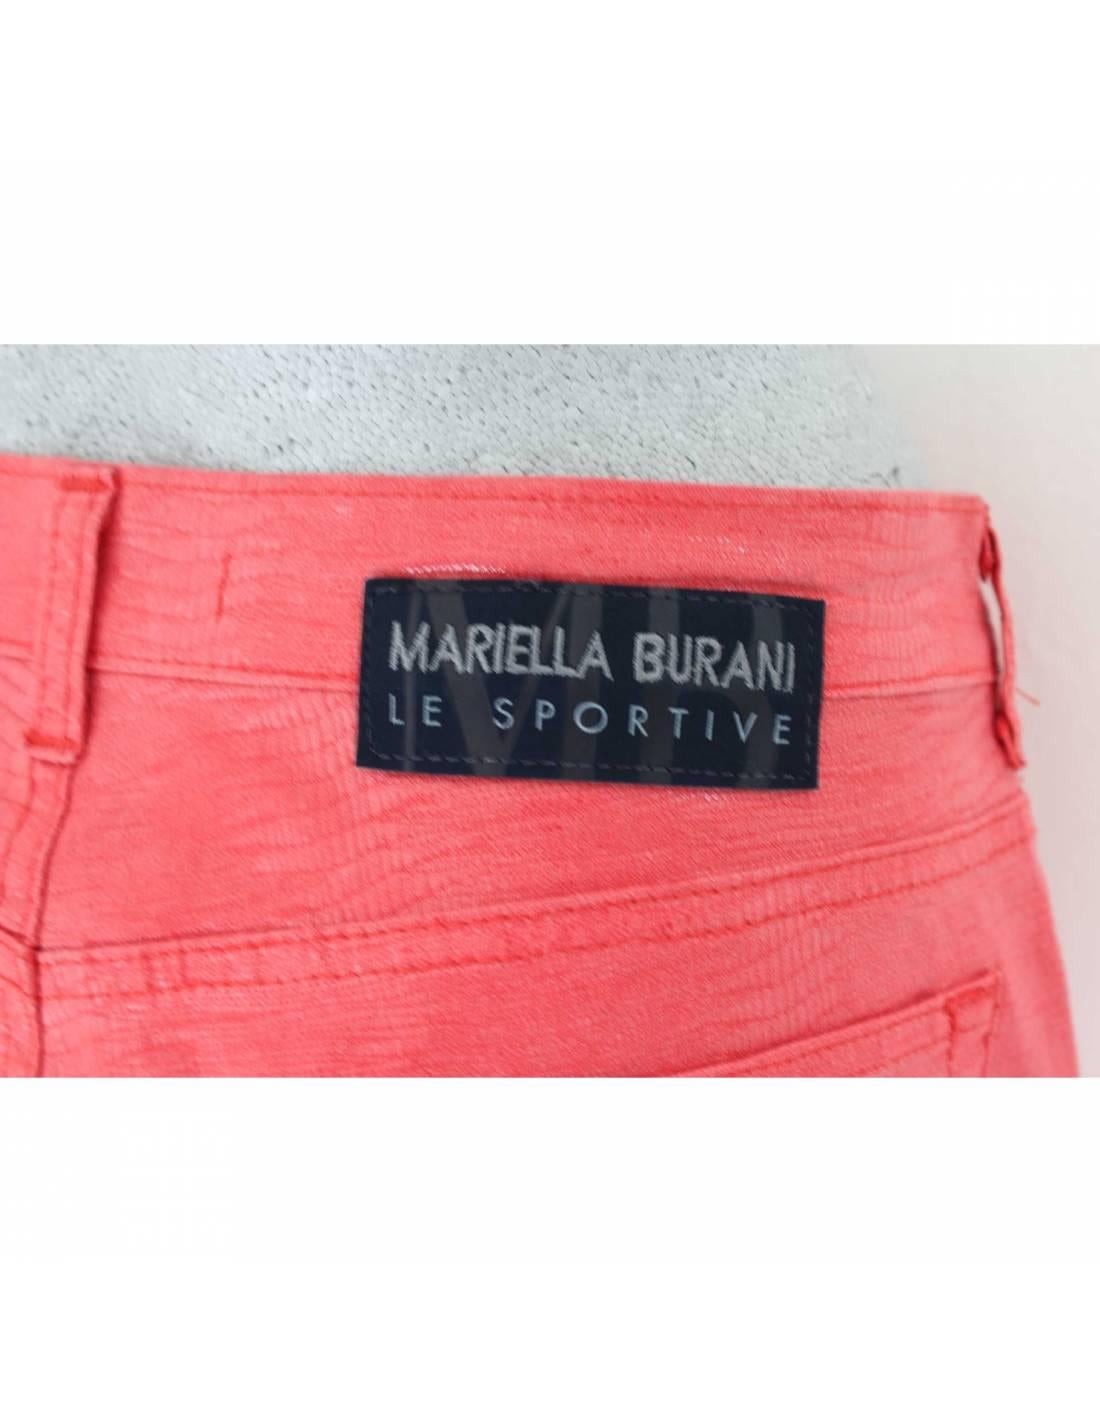 Mariella Burani Pink Cotton Waxed Flared Pants For Sale 2